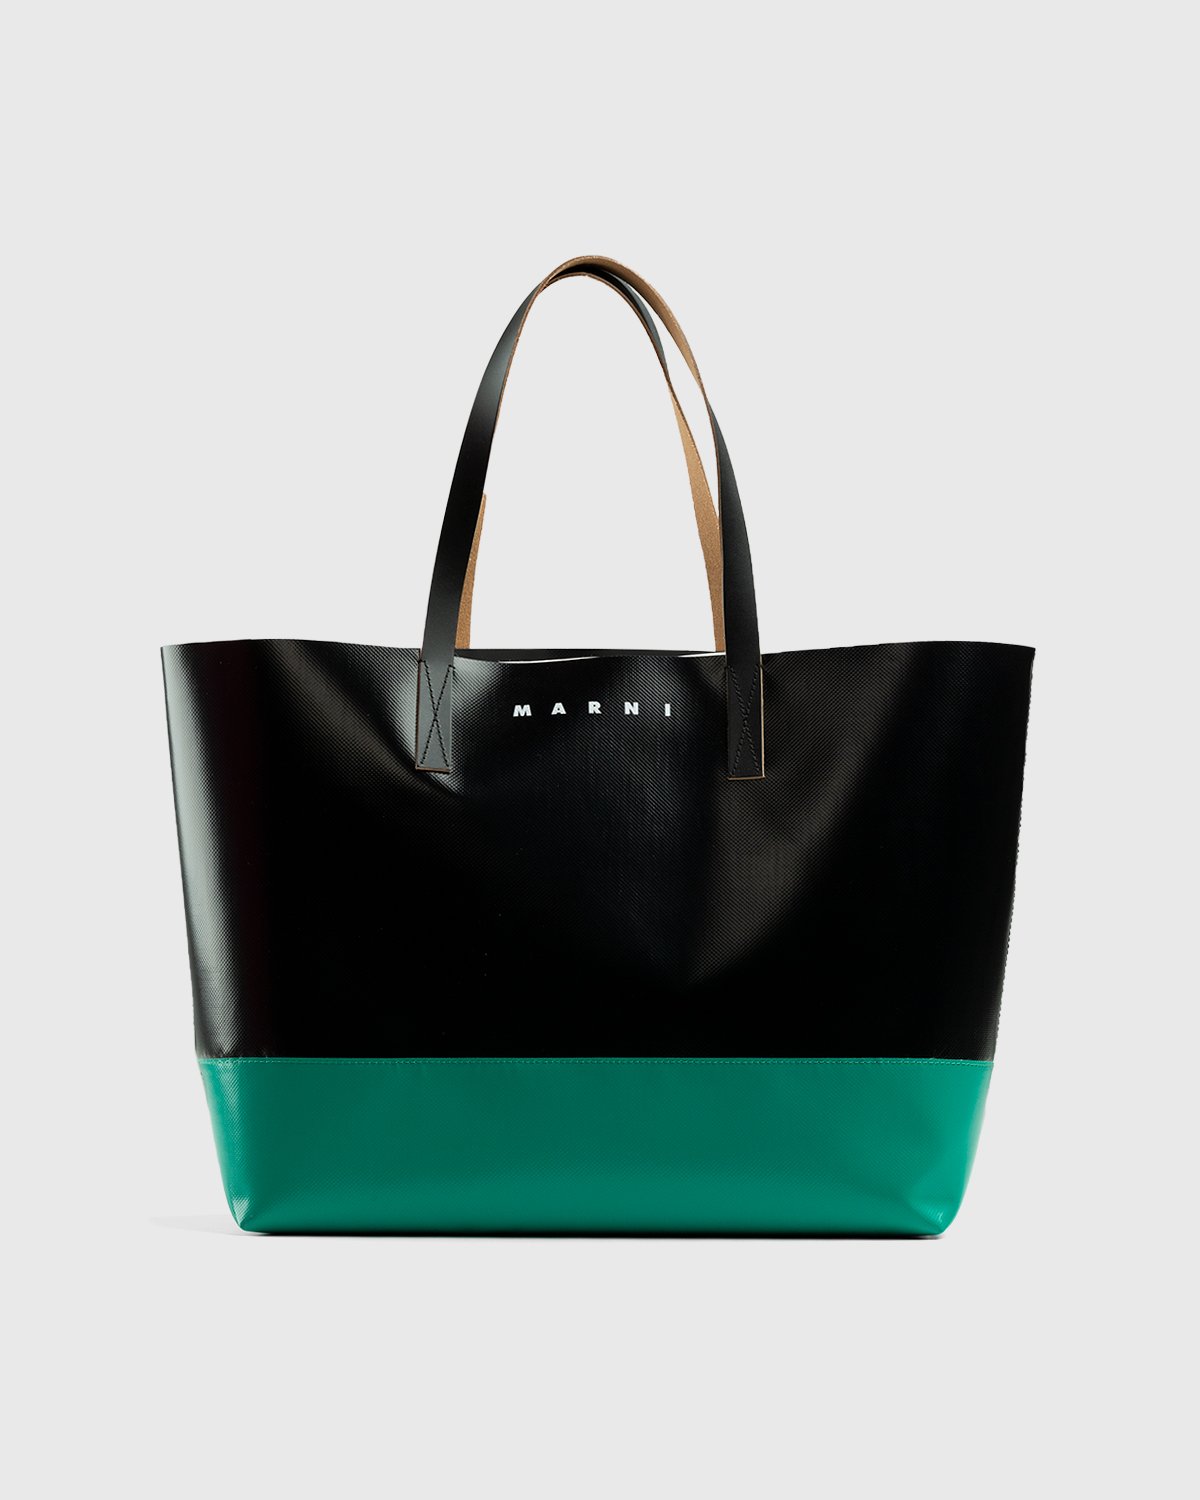 Marni - Tribeca Two-Tone Tote Bag Black/Green - Accessories - Black - Image 1